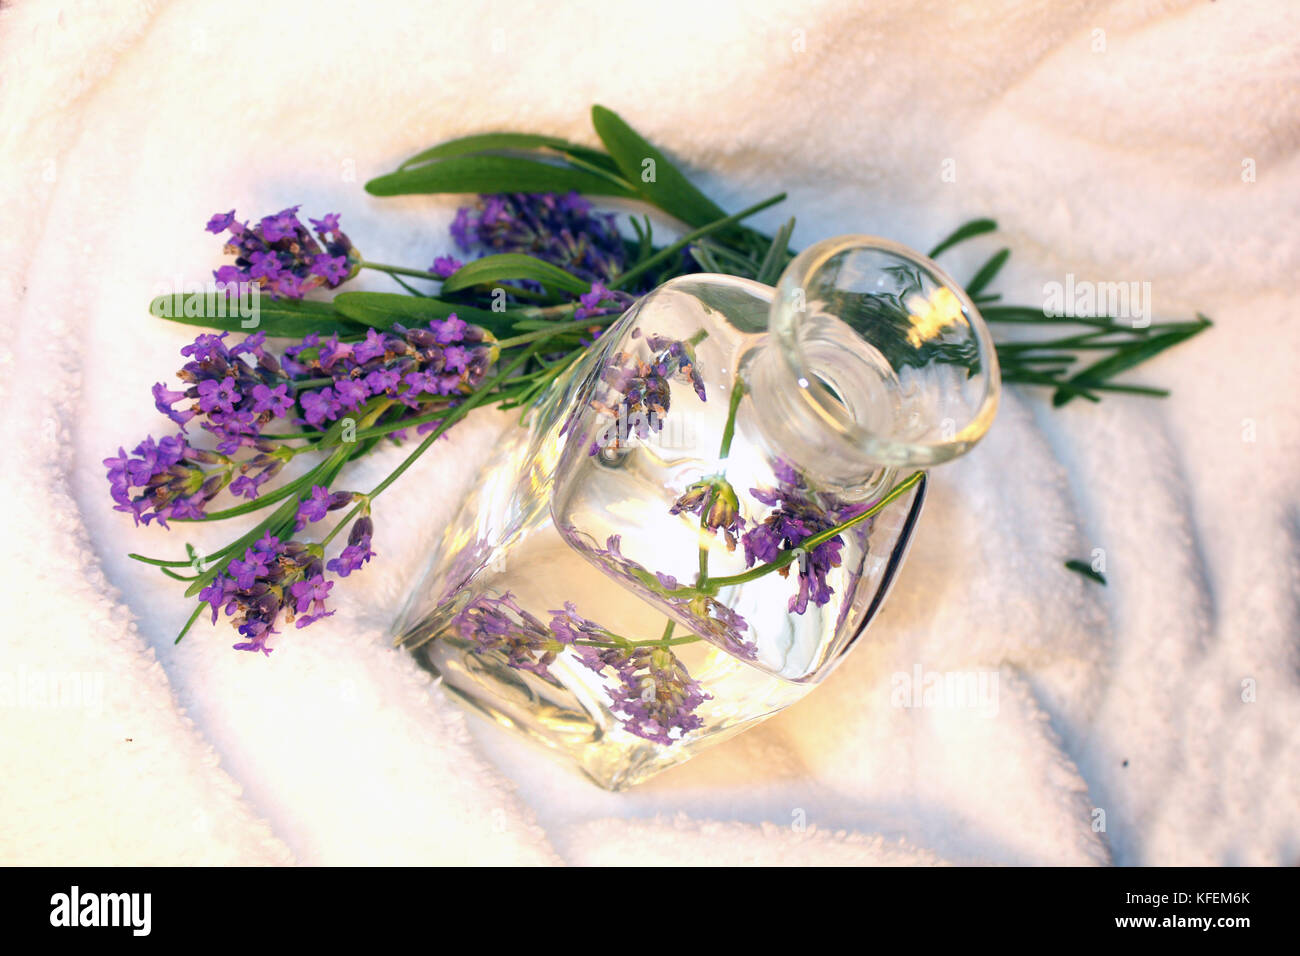 Lavendelöl, Lavendel Wasser, Lavandula angustifolia Stock Photo